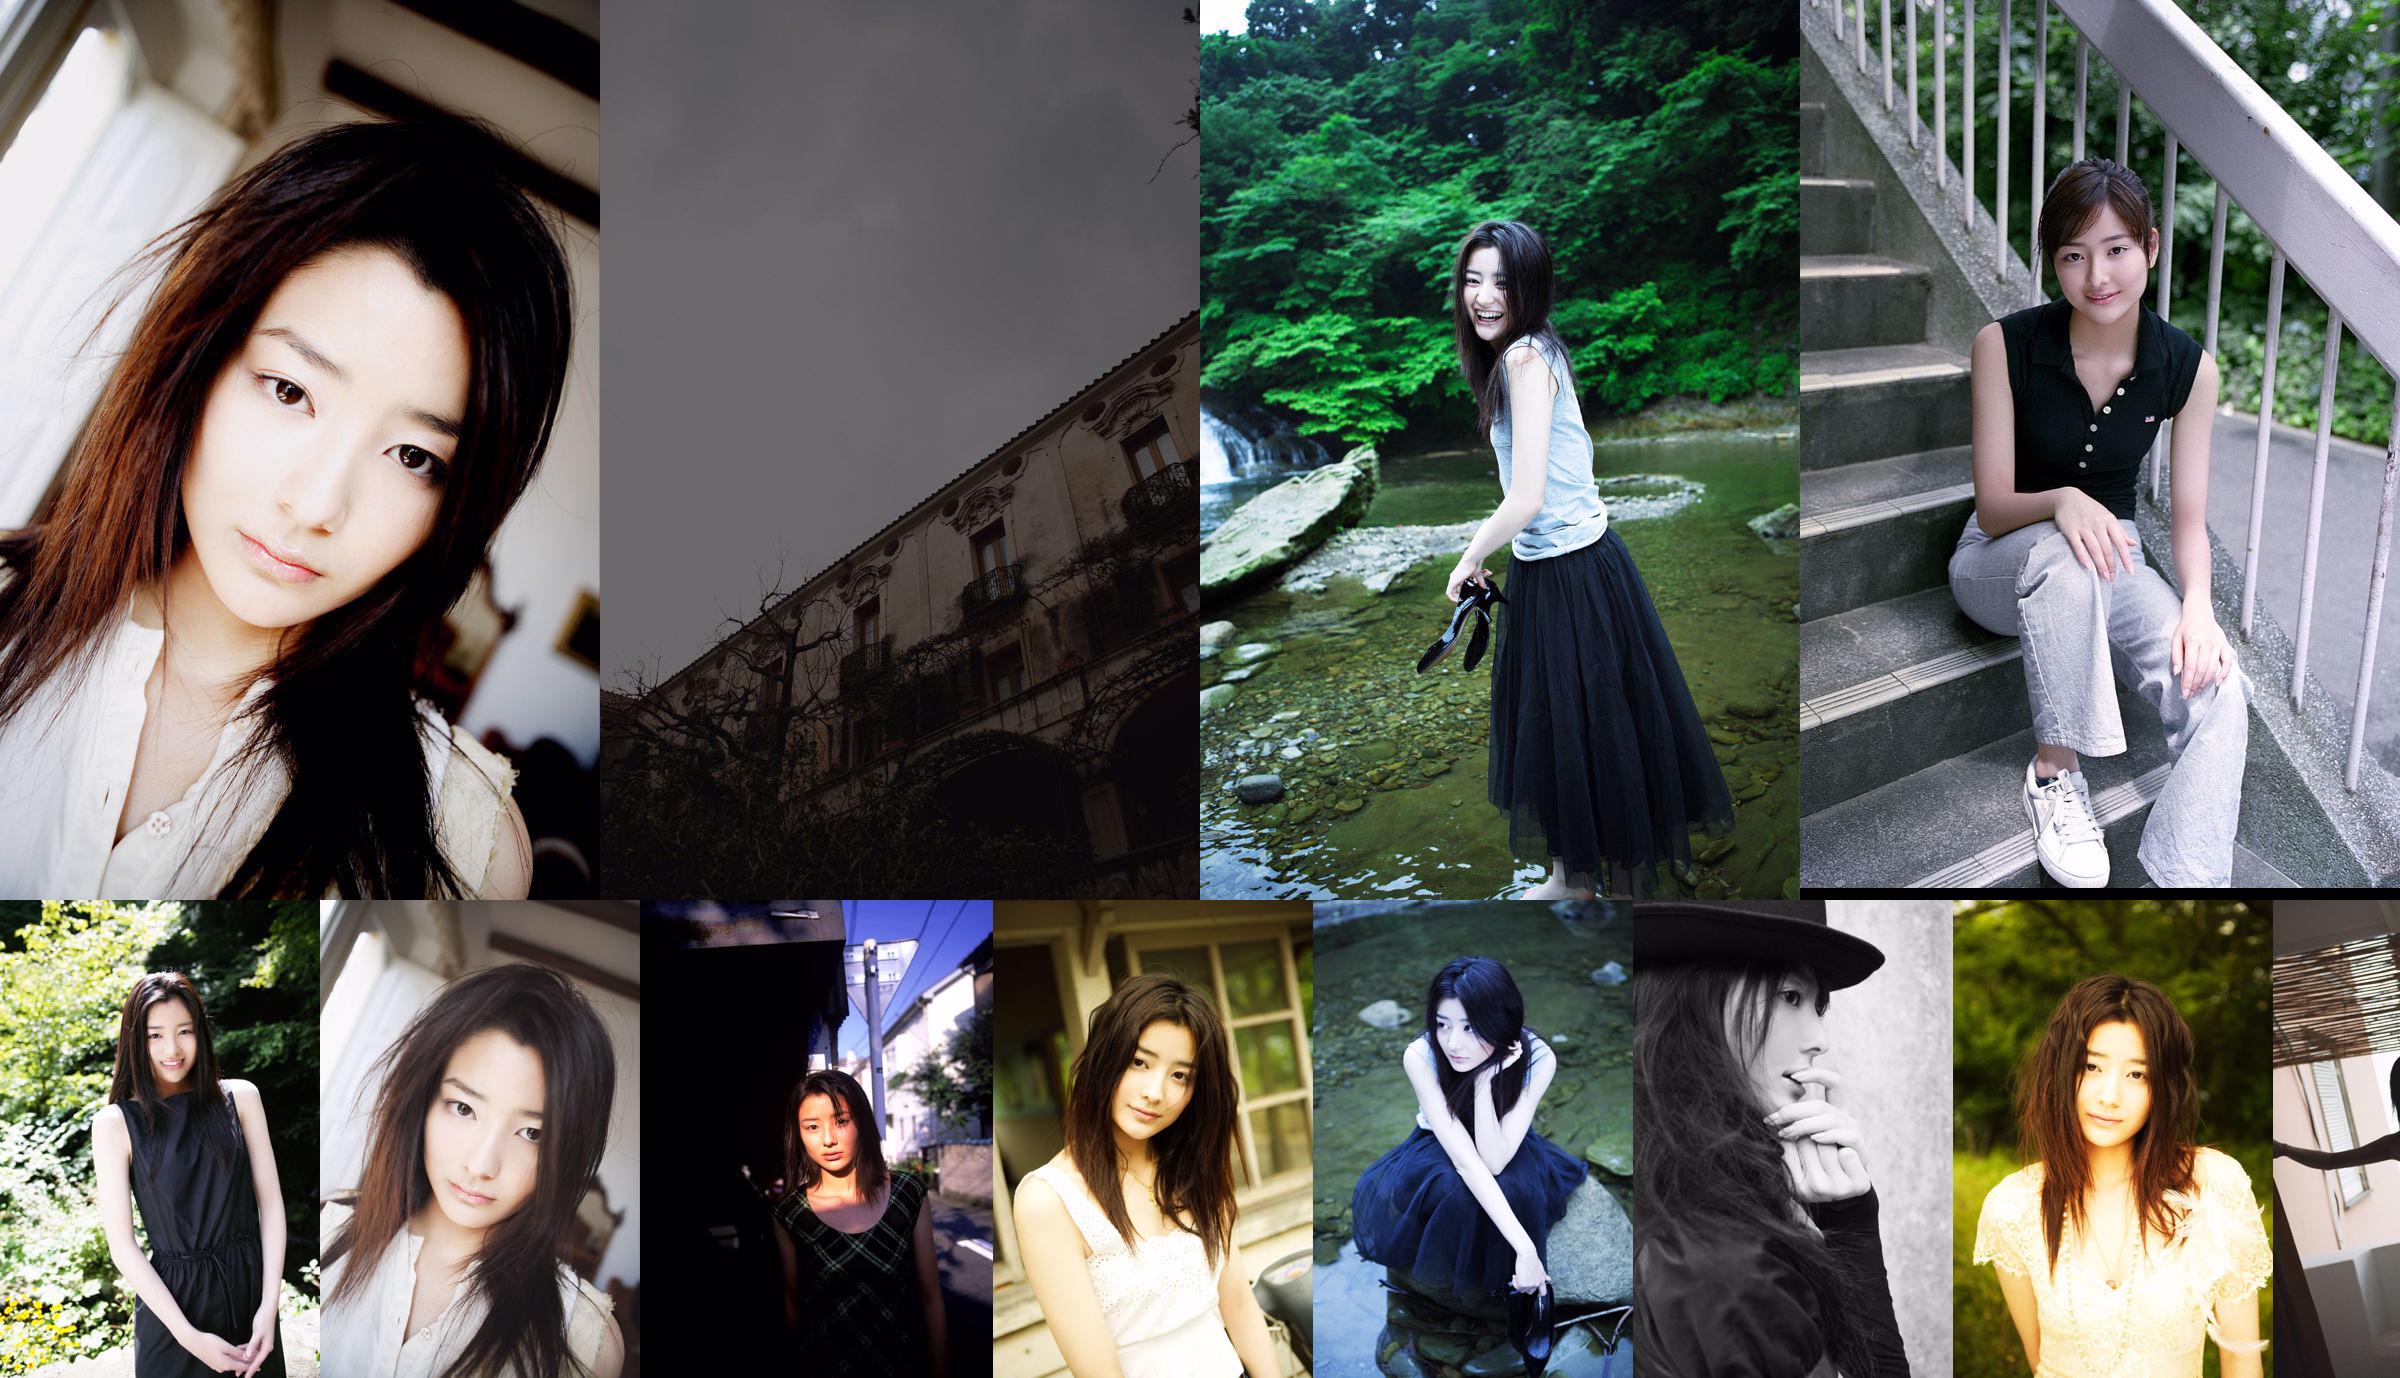 Kyoko Hinami Moe Arai [Saut hebdomadaire des jeunes] 2014 No.29 Photo No.34799a Page 1